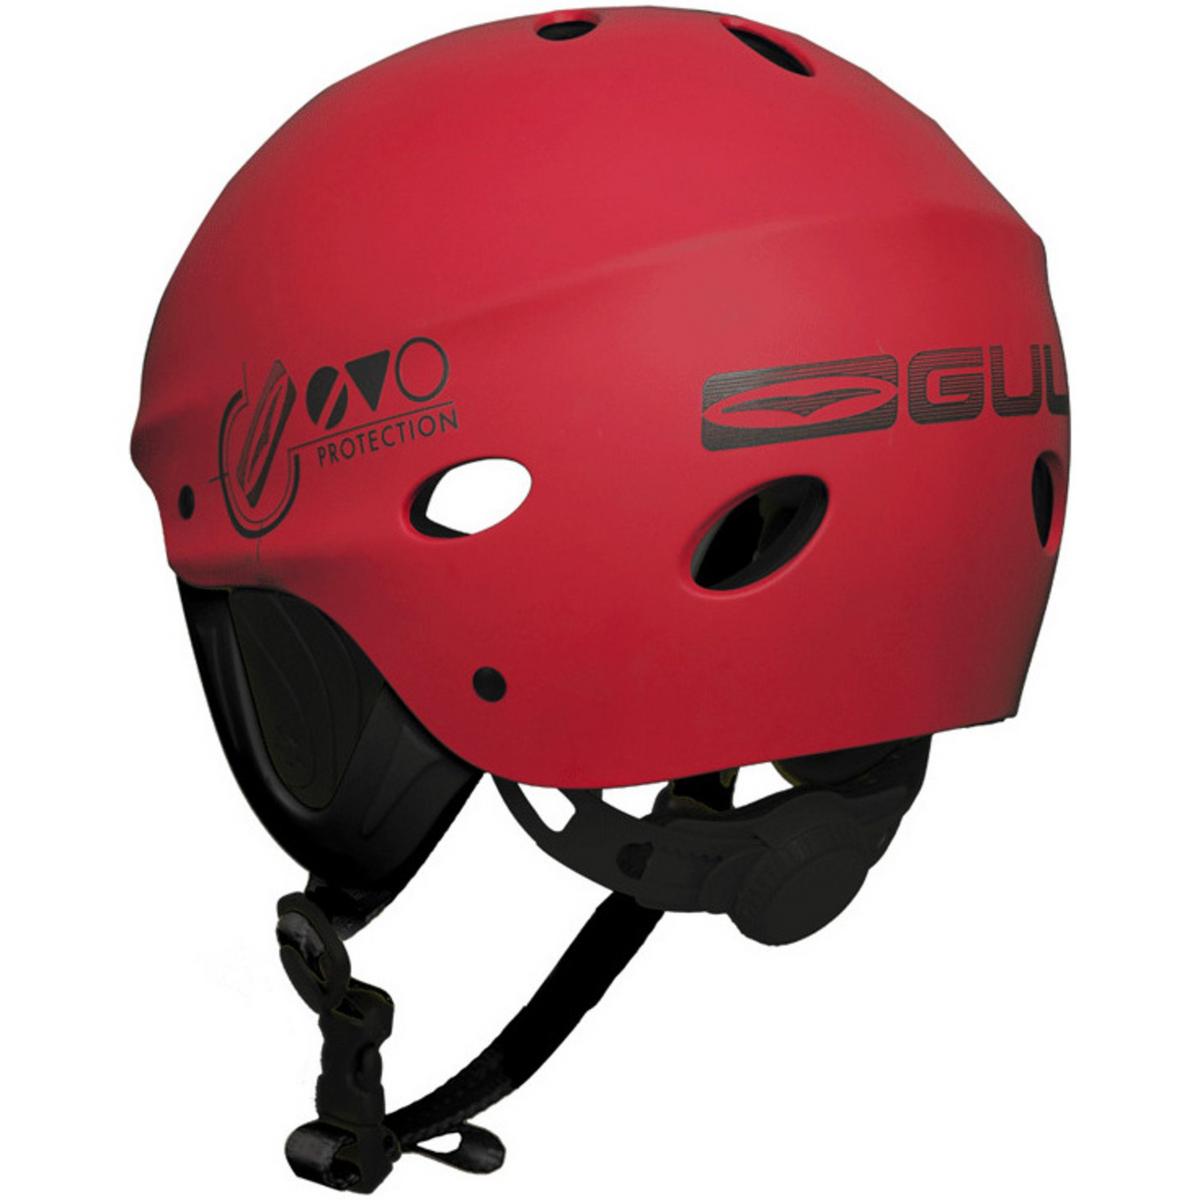 Gul Evo Helmet - Red